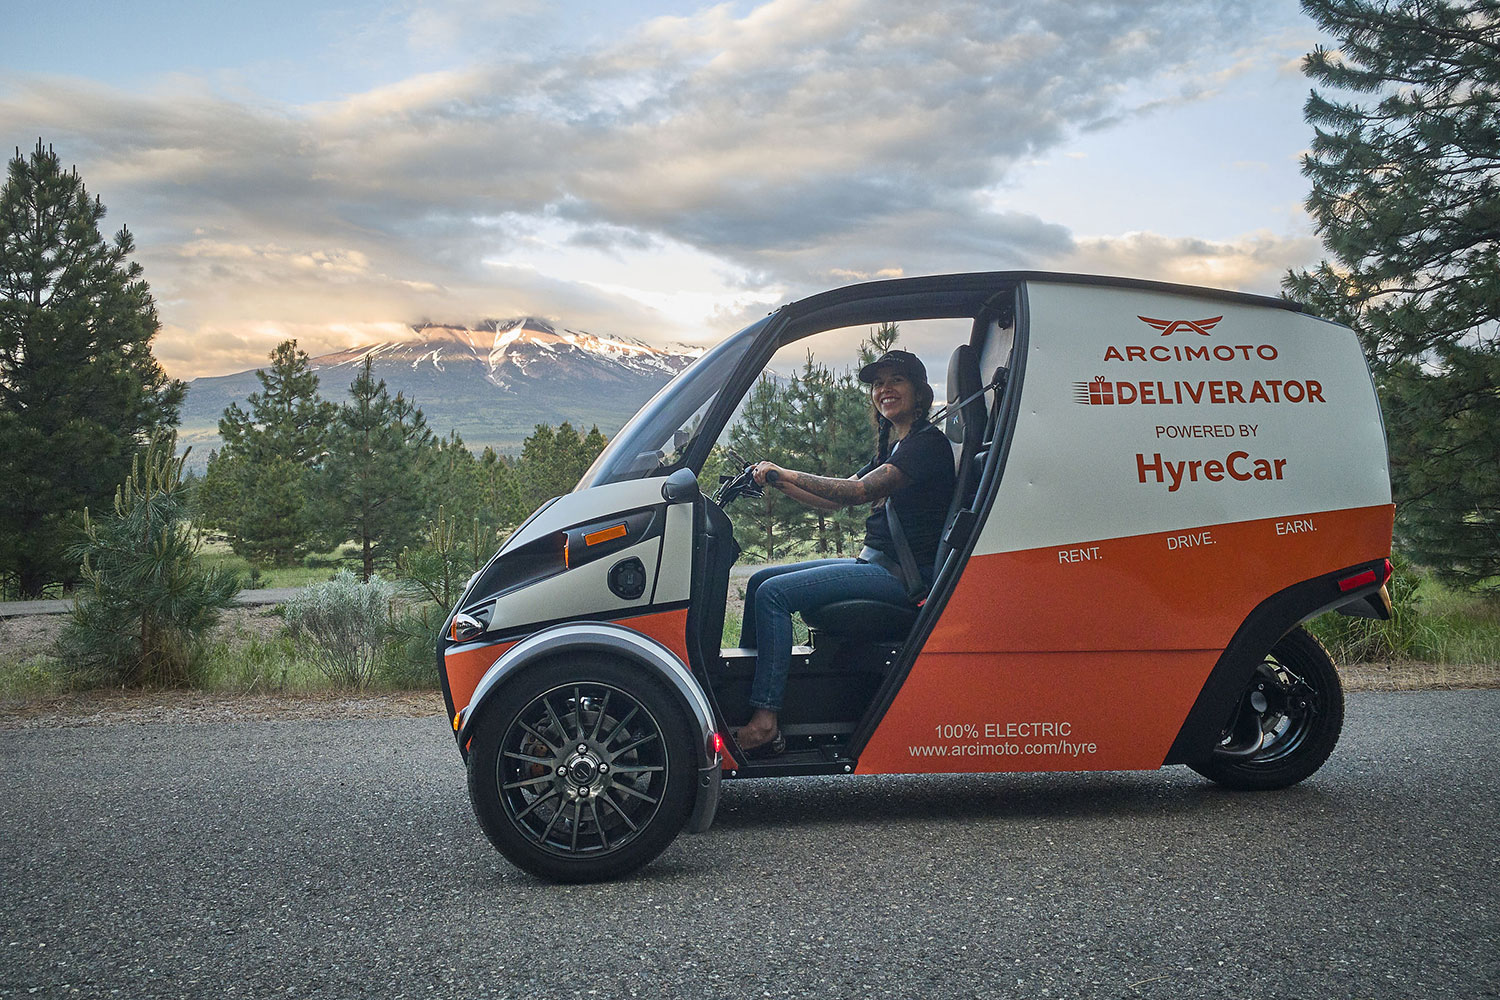 Arcimoto begins renting its three-wheel electric Deliverator in LA using HyreCar.